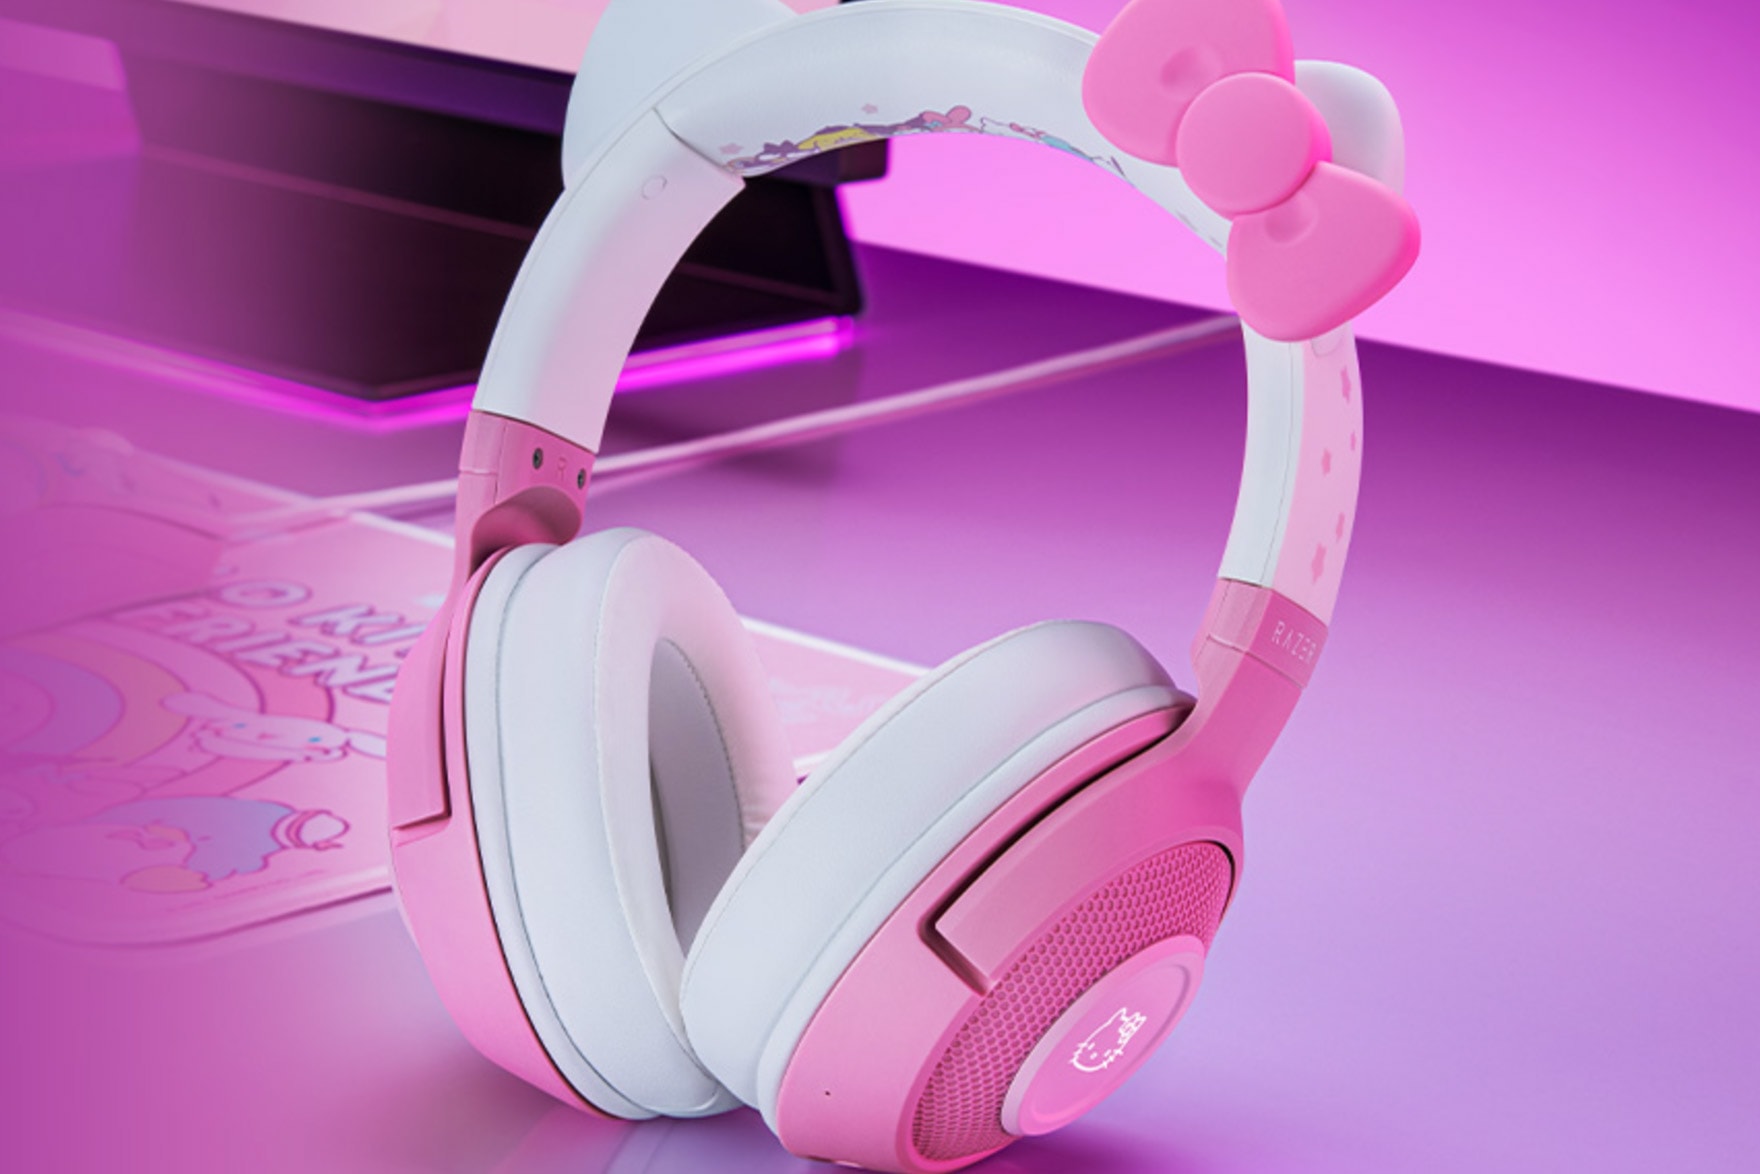 Razer Hello Kitty and Friends Releasing info Iskur X gaming chair Kraken BT headset Goliathus gaming mat Sanrio 